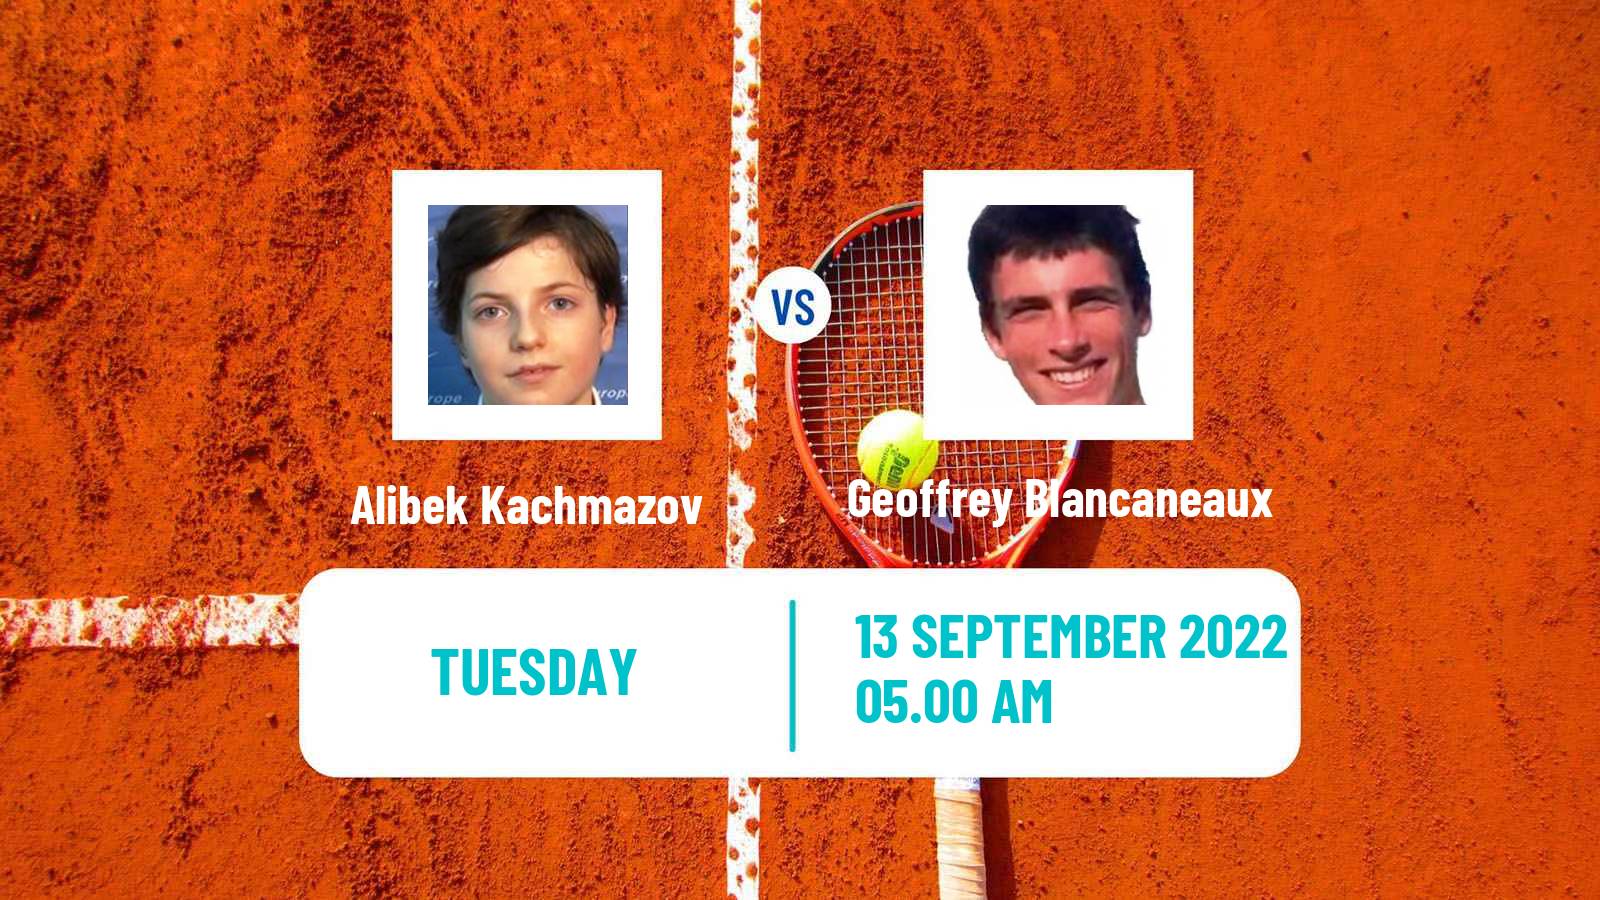 Tennis ATP Challenger Alibek Kachmazov - Geoffrey Blancaneaux